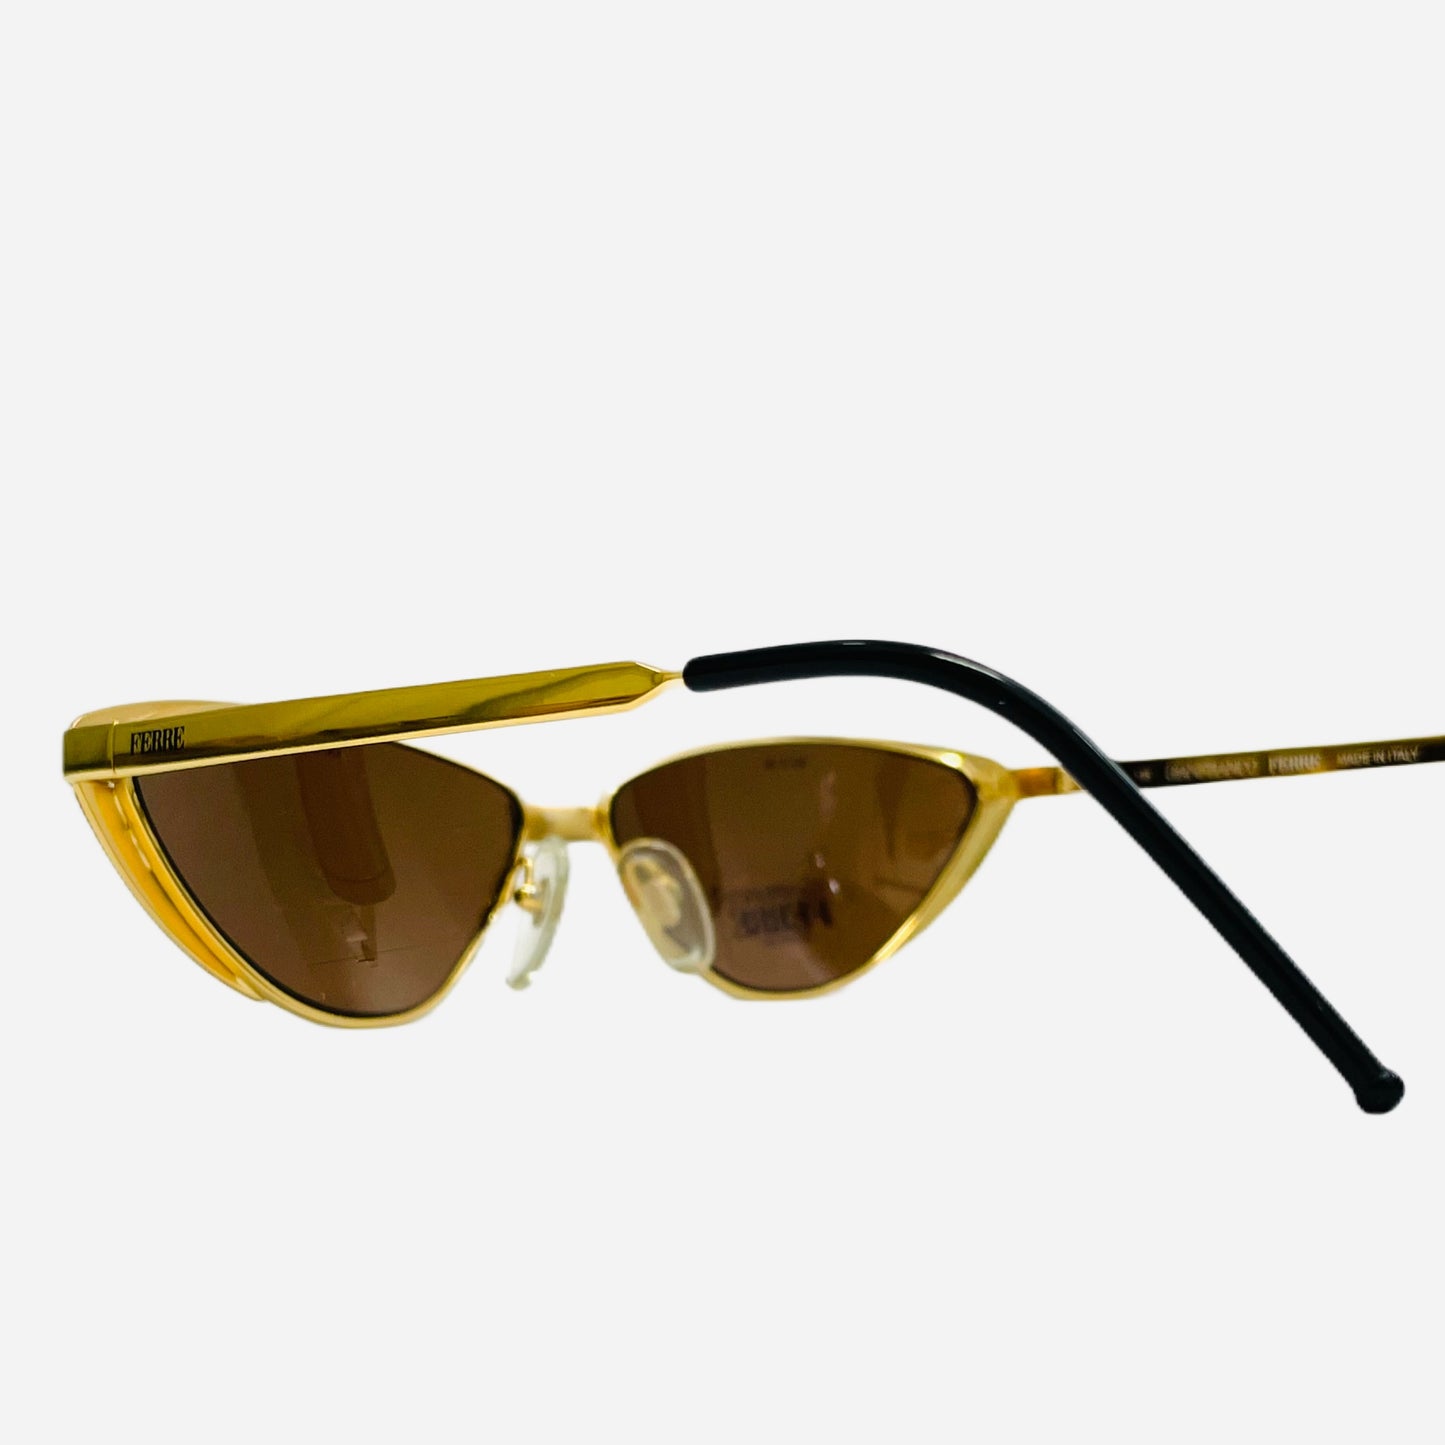 Vintage-Gianfranco-Ferre-Sonnenbrille-Sunglasses-GFF-149-The-Seekers-back-detail